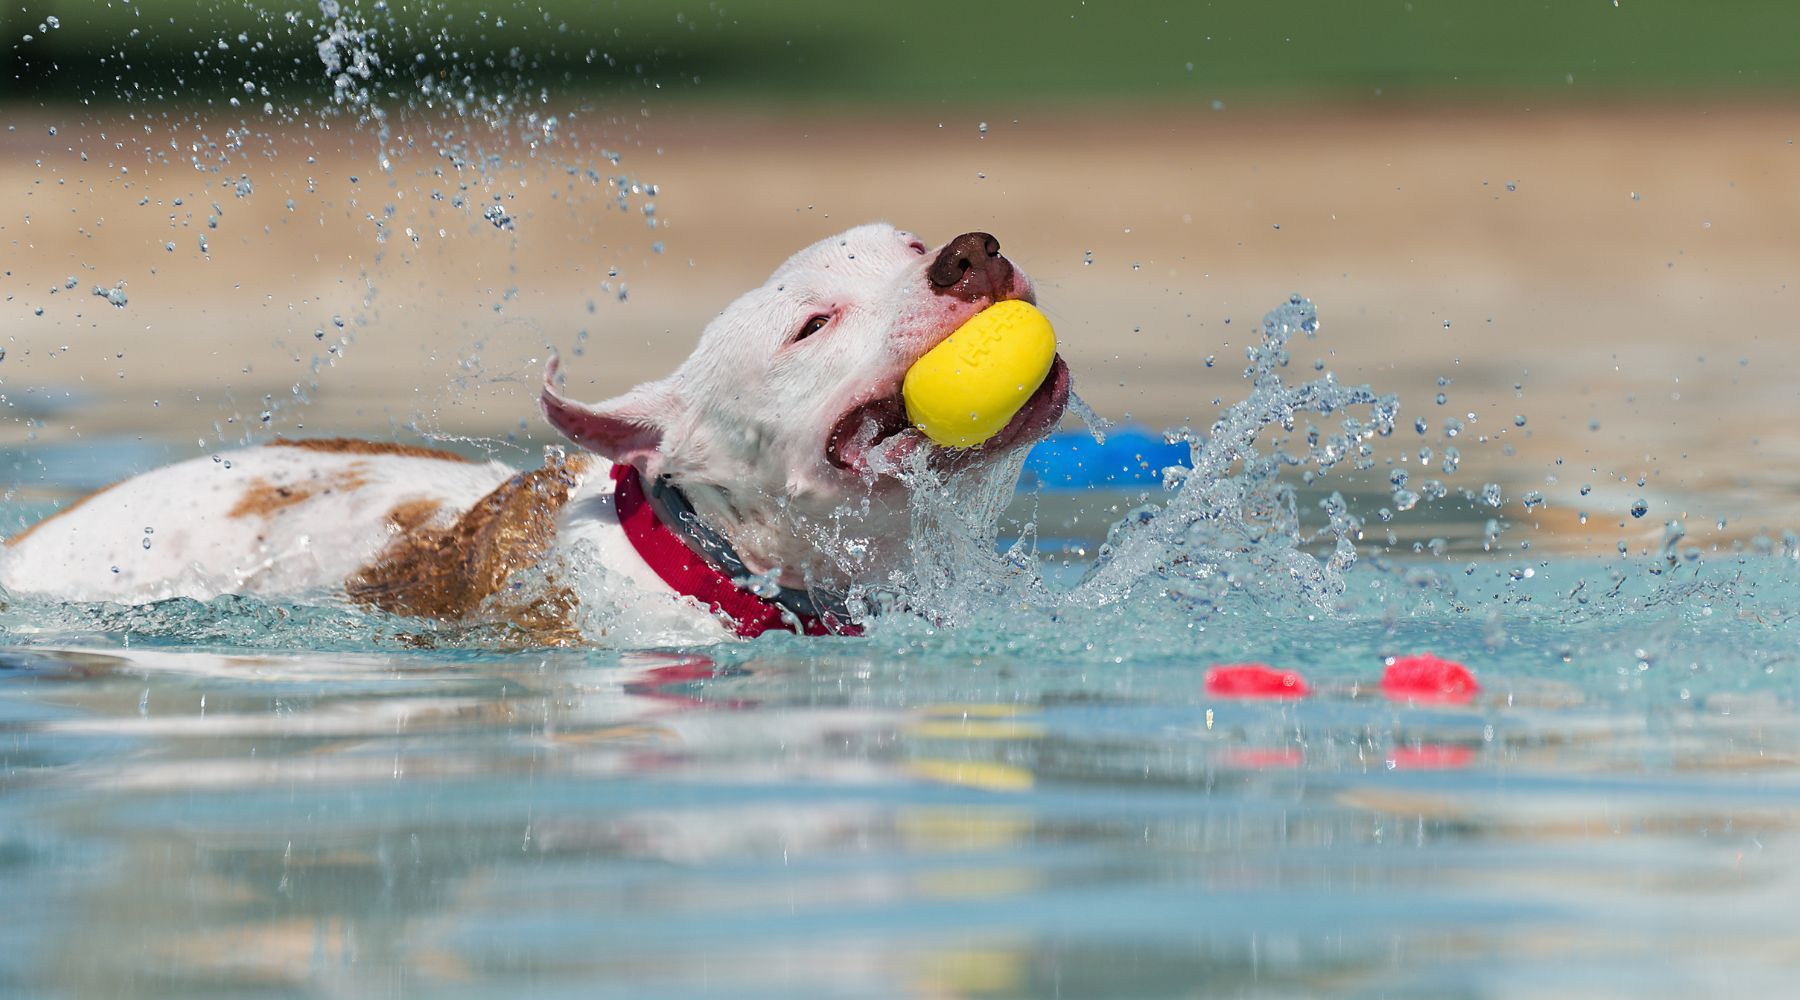 do pitbull terriers like to swim? 2